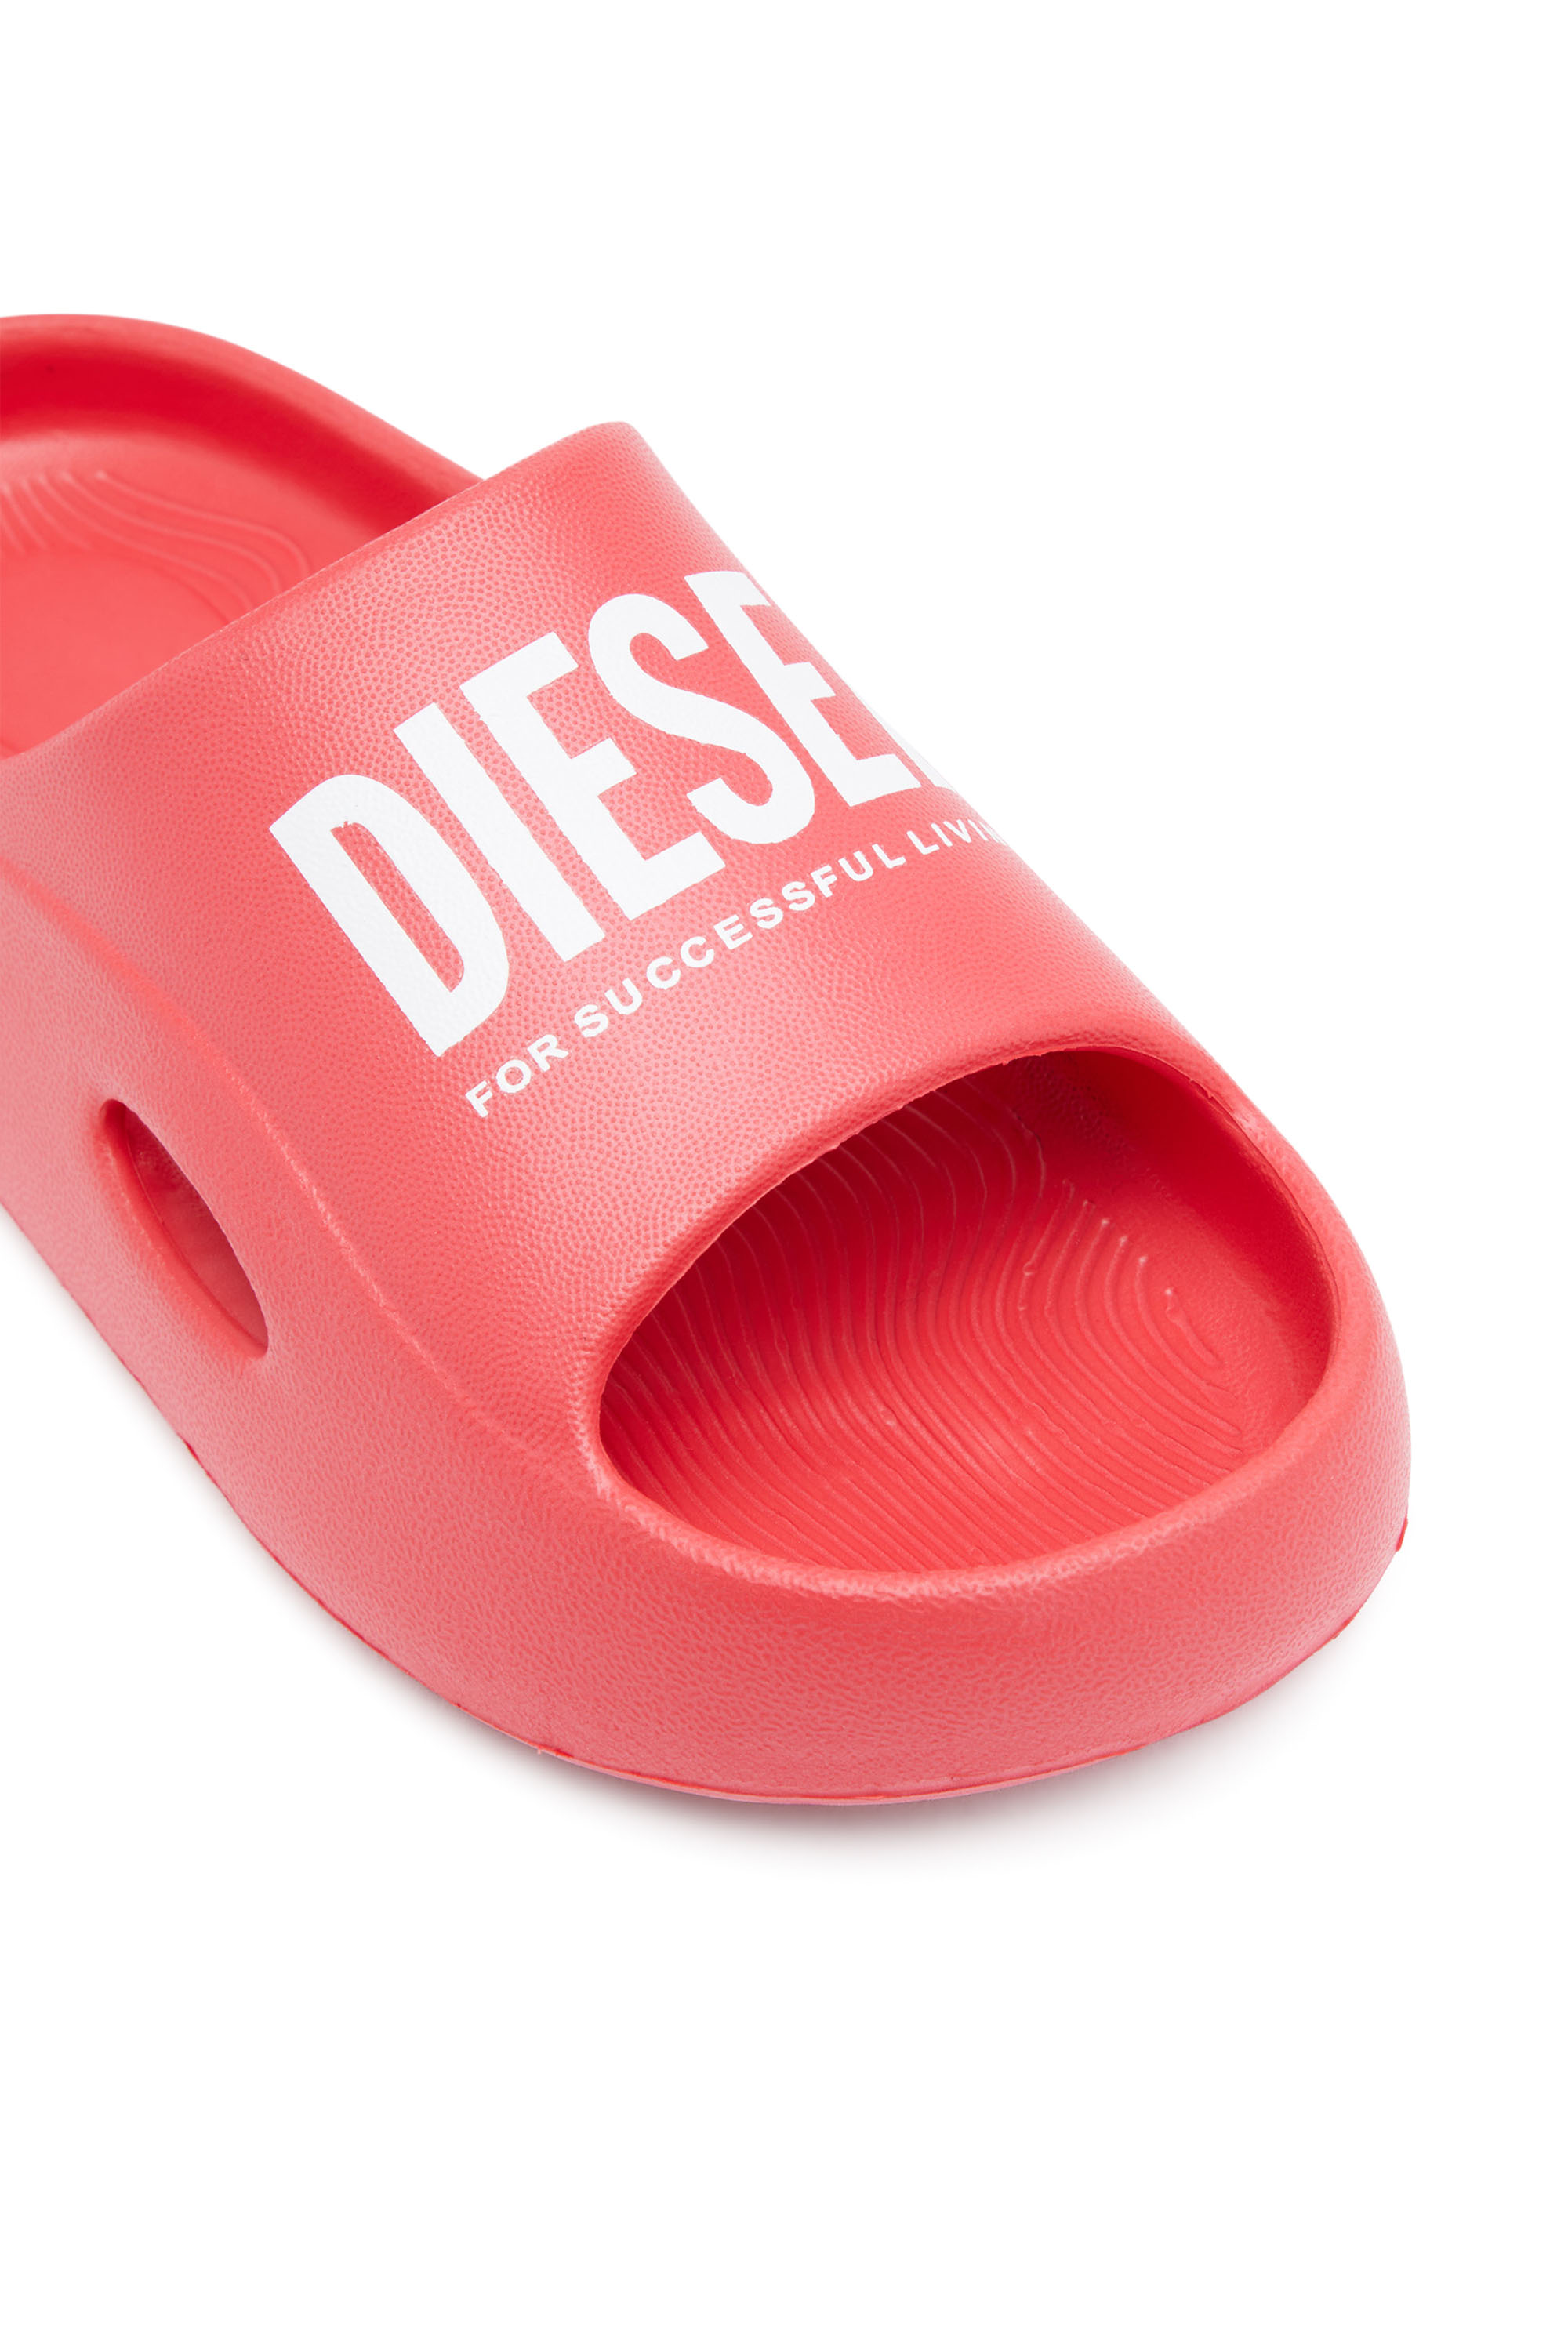 Diesel - SA-CHUNCKY, Rosso - Image 6